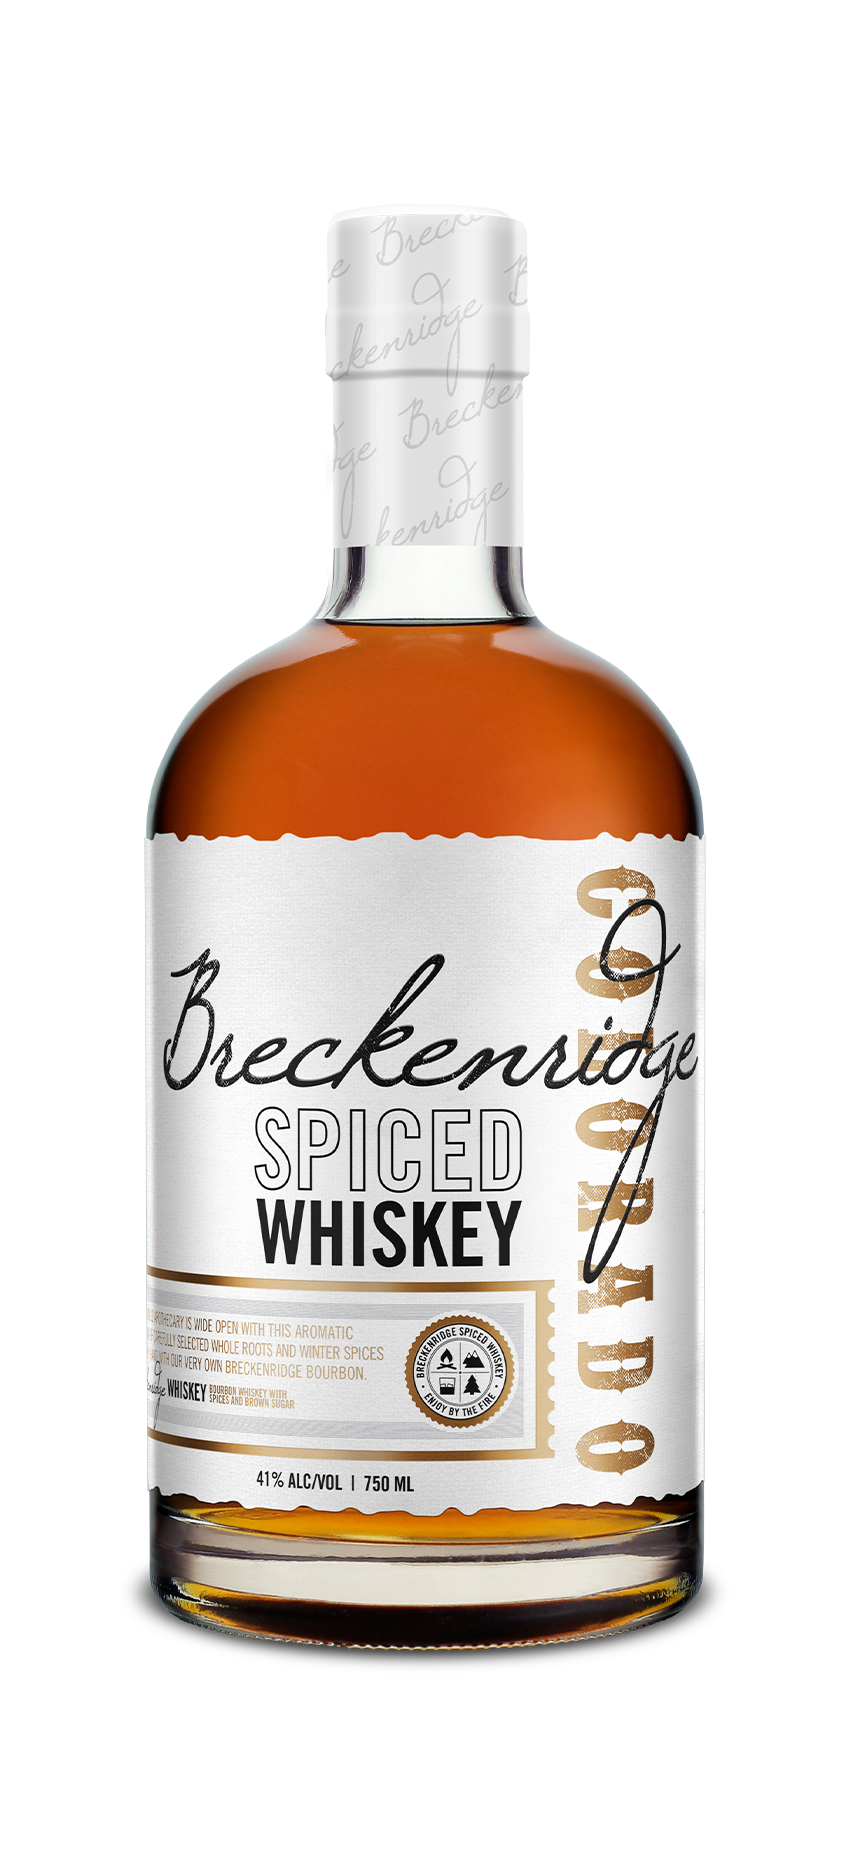 Breckenridge Spiced Whiskey bottle 750 mL